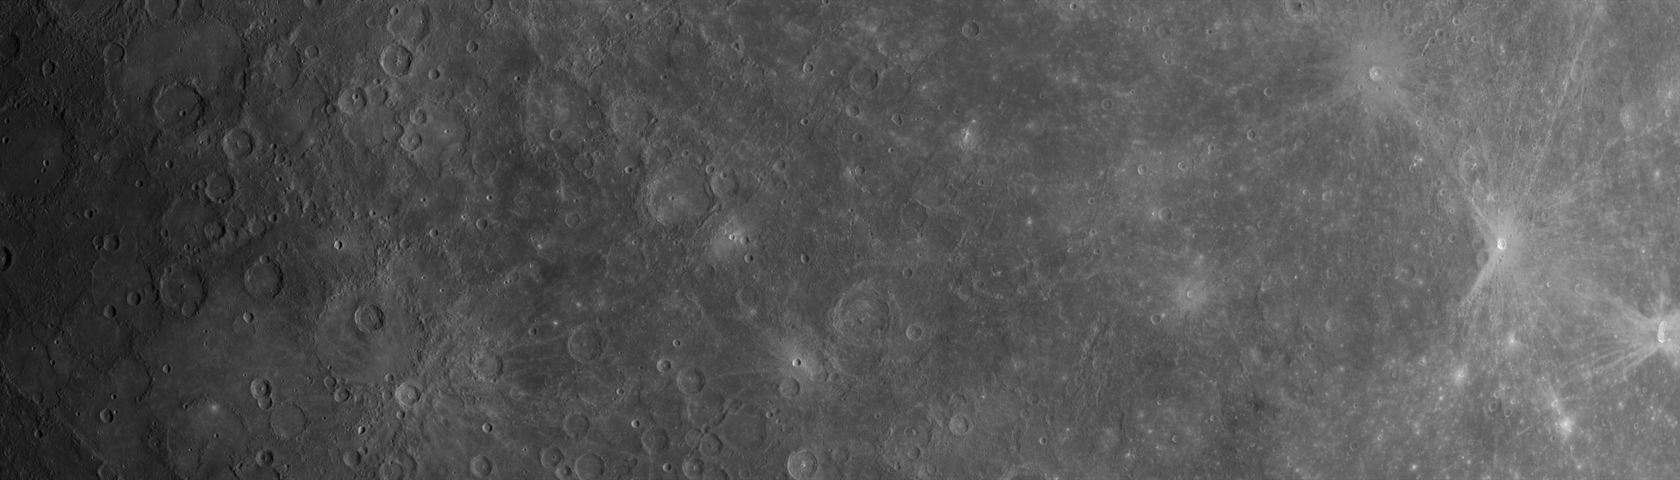 Mercury Close-Up